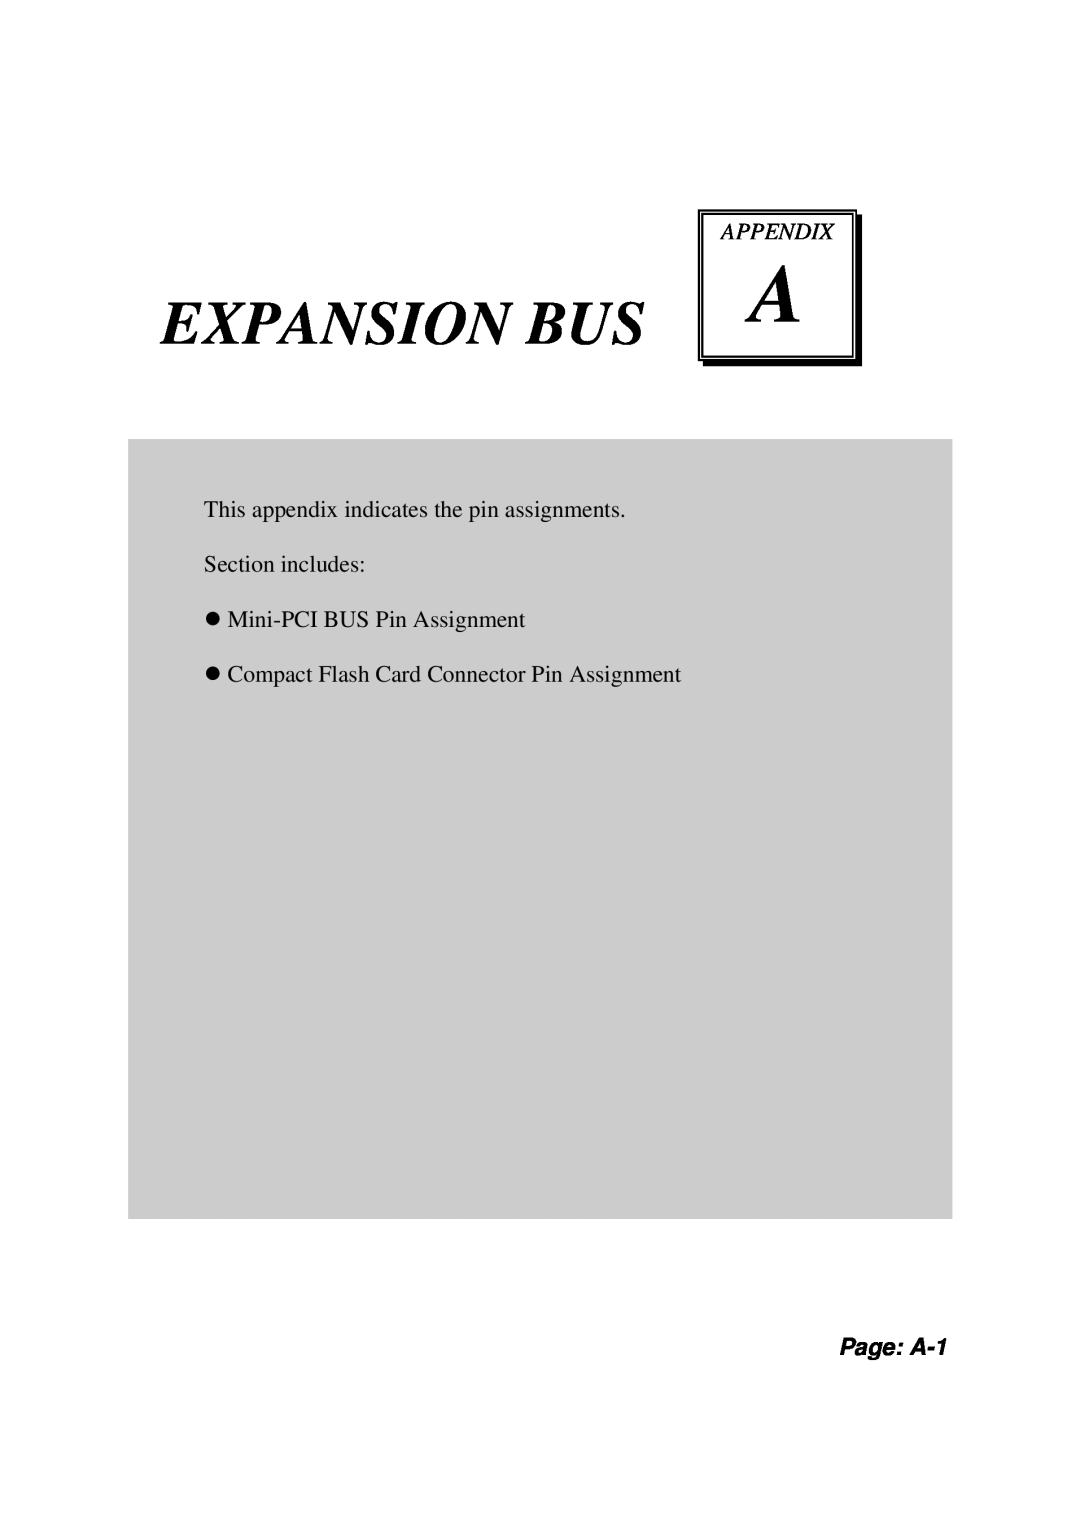 Intel PMB-531LF user manual Expansion Bus, Appendix, Page A-1 